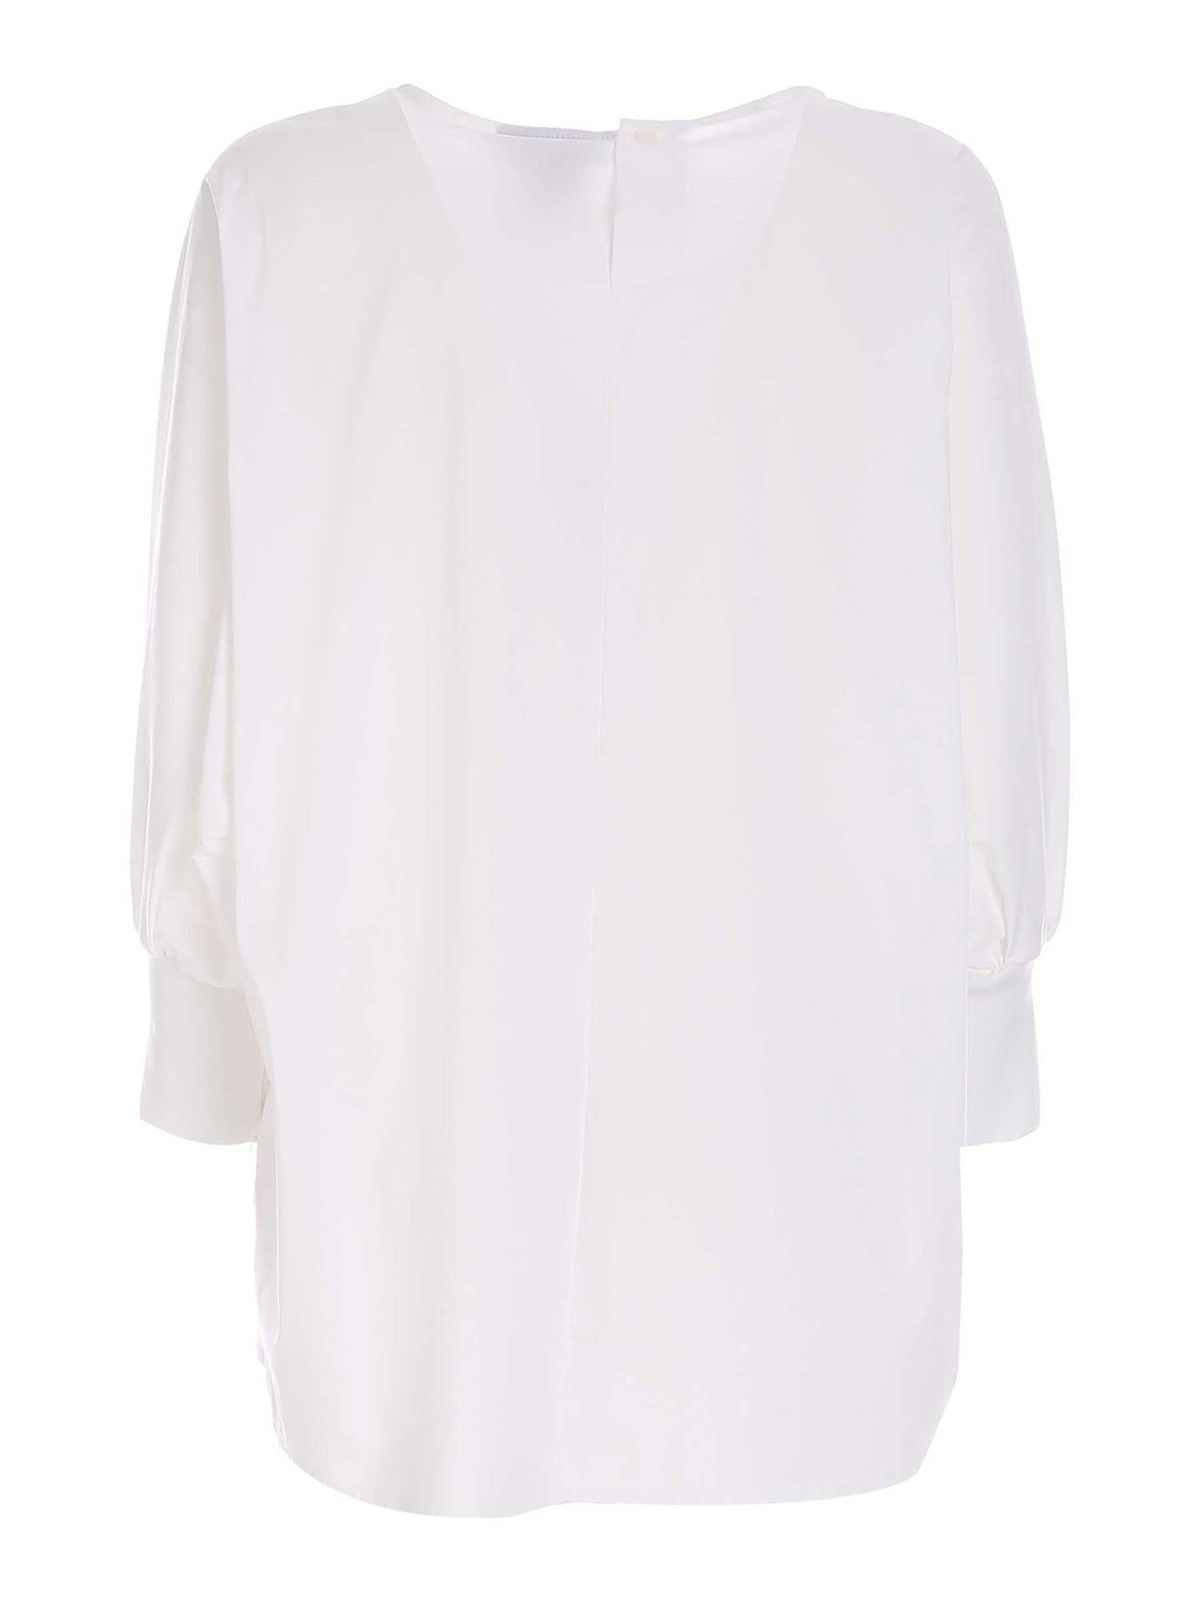 Blouses Dkny - Oversize poplin blouse in white - P0DA0FL2WHT | iKRIX.com